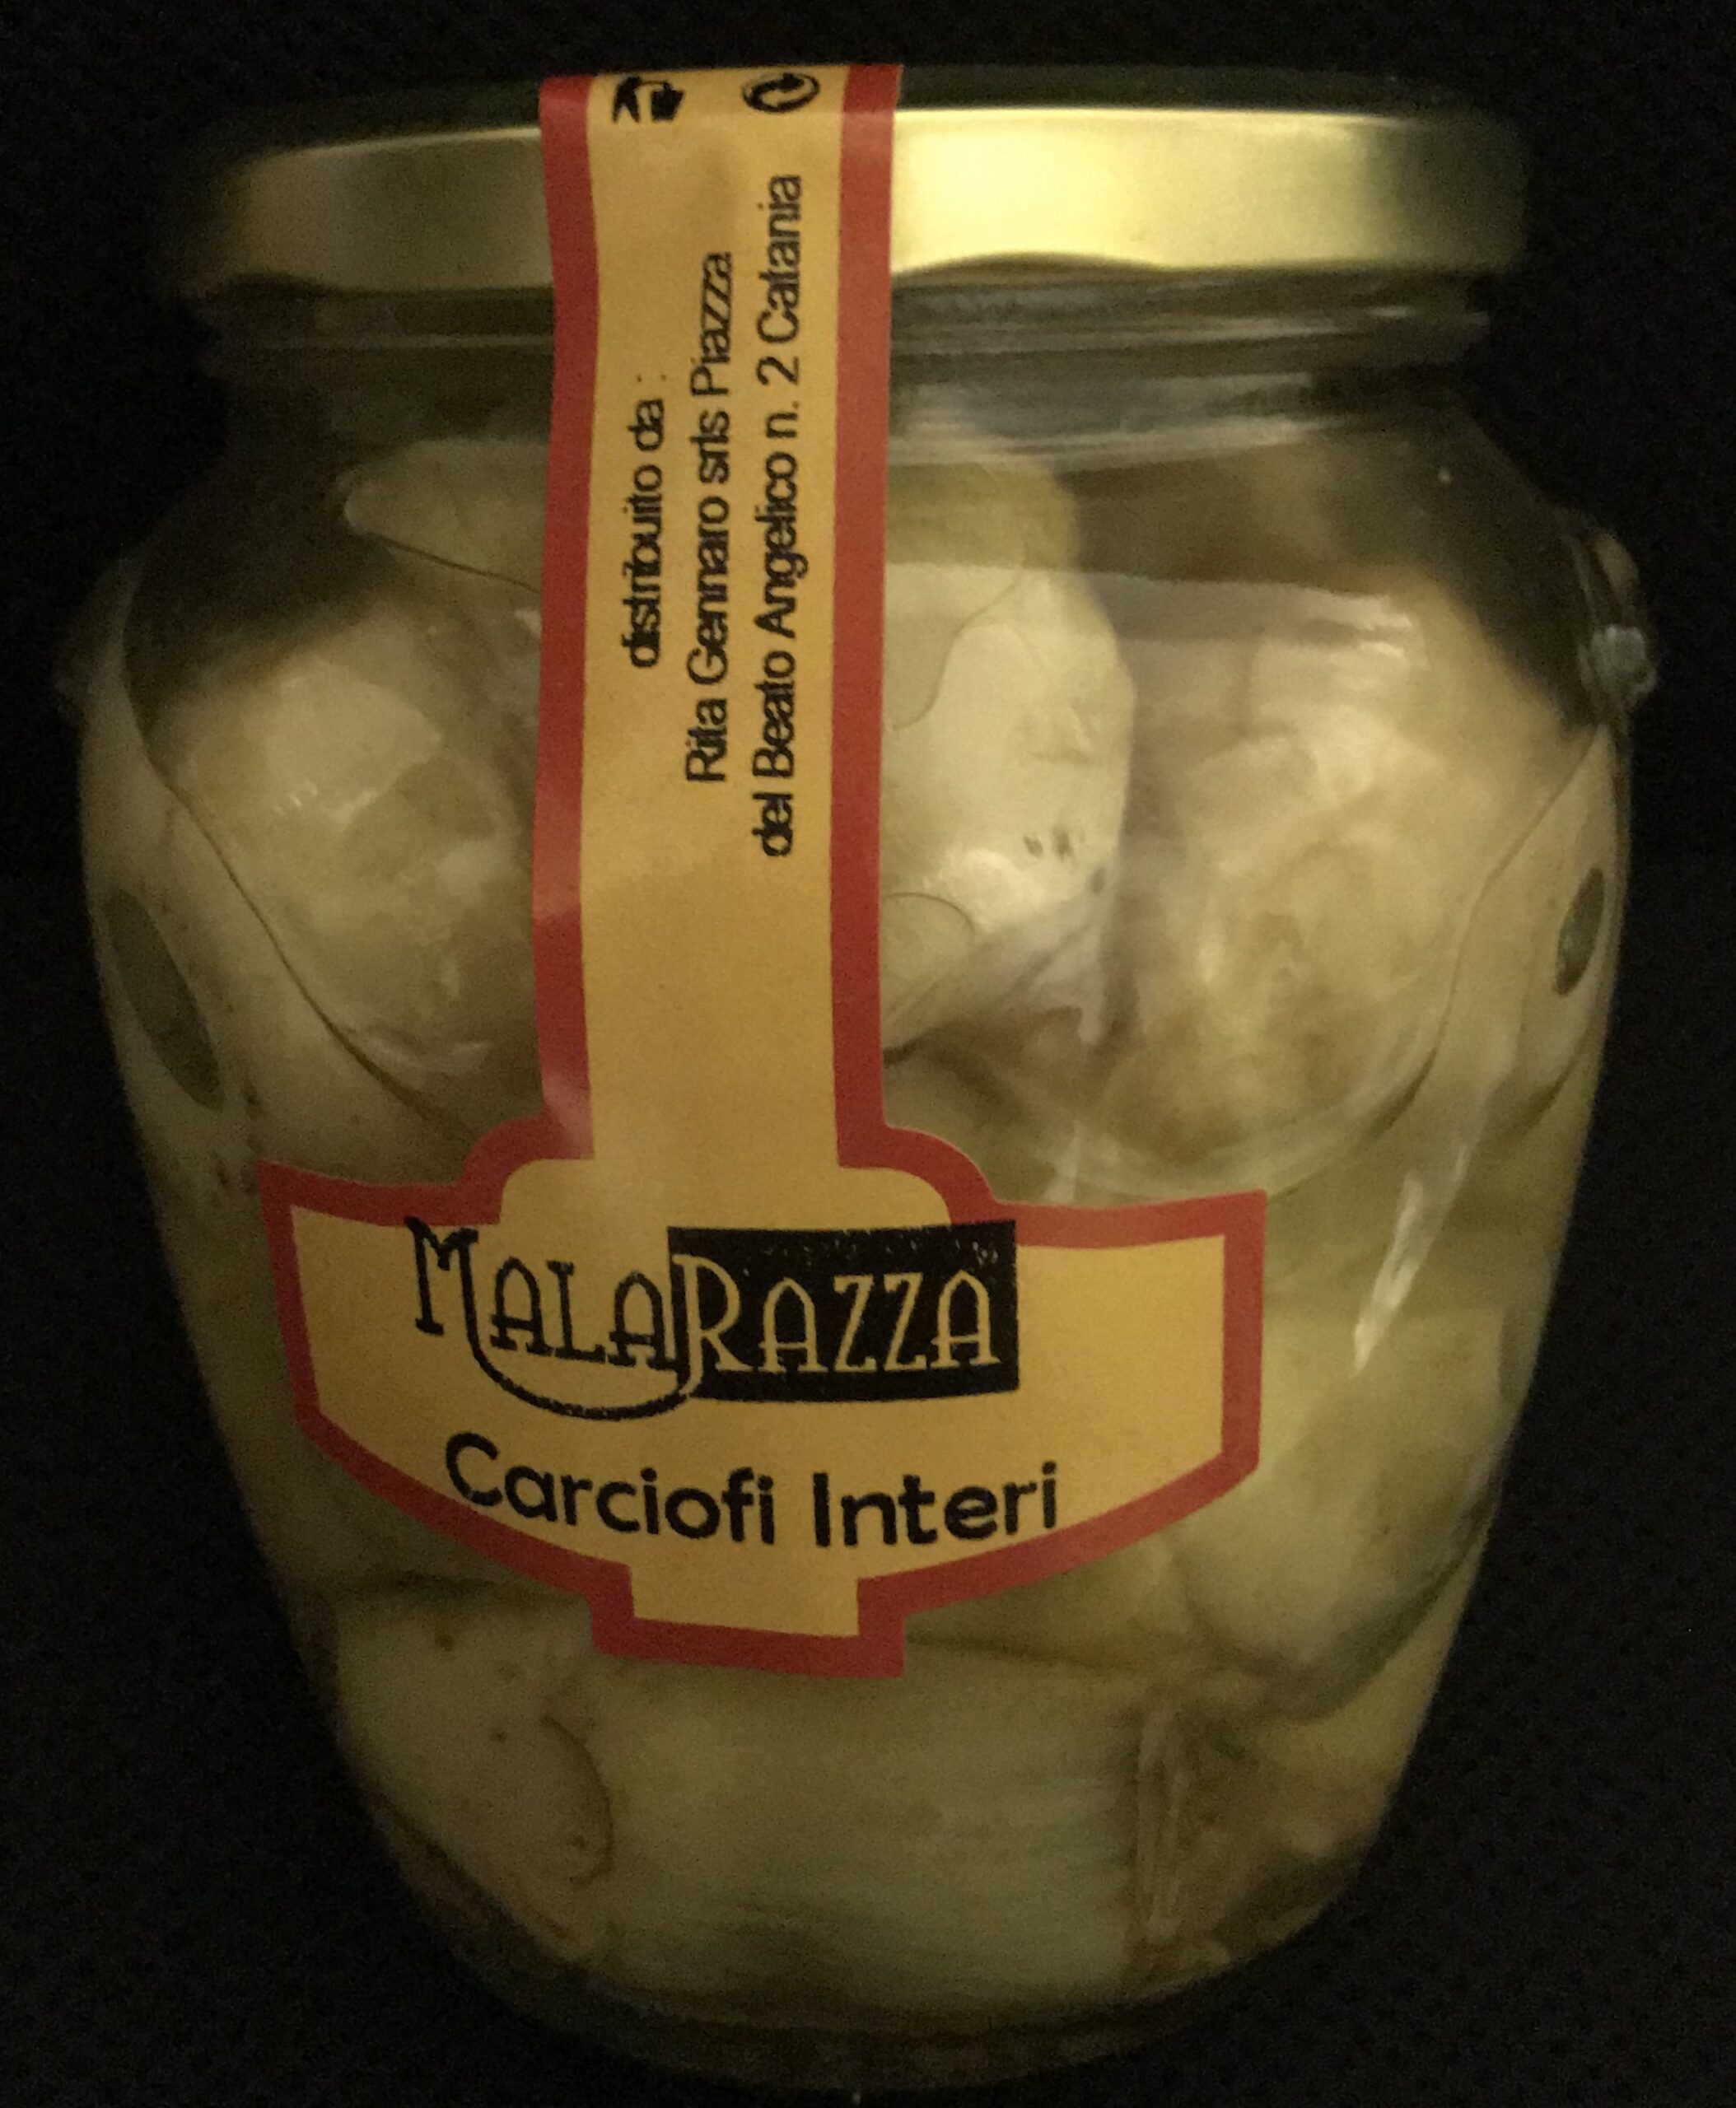 malarazza food made in italy carciofi-interi